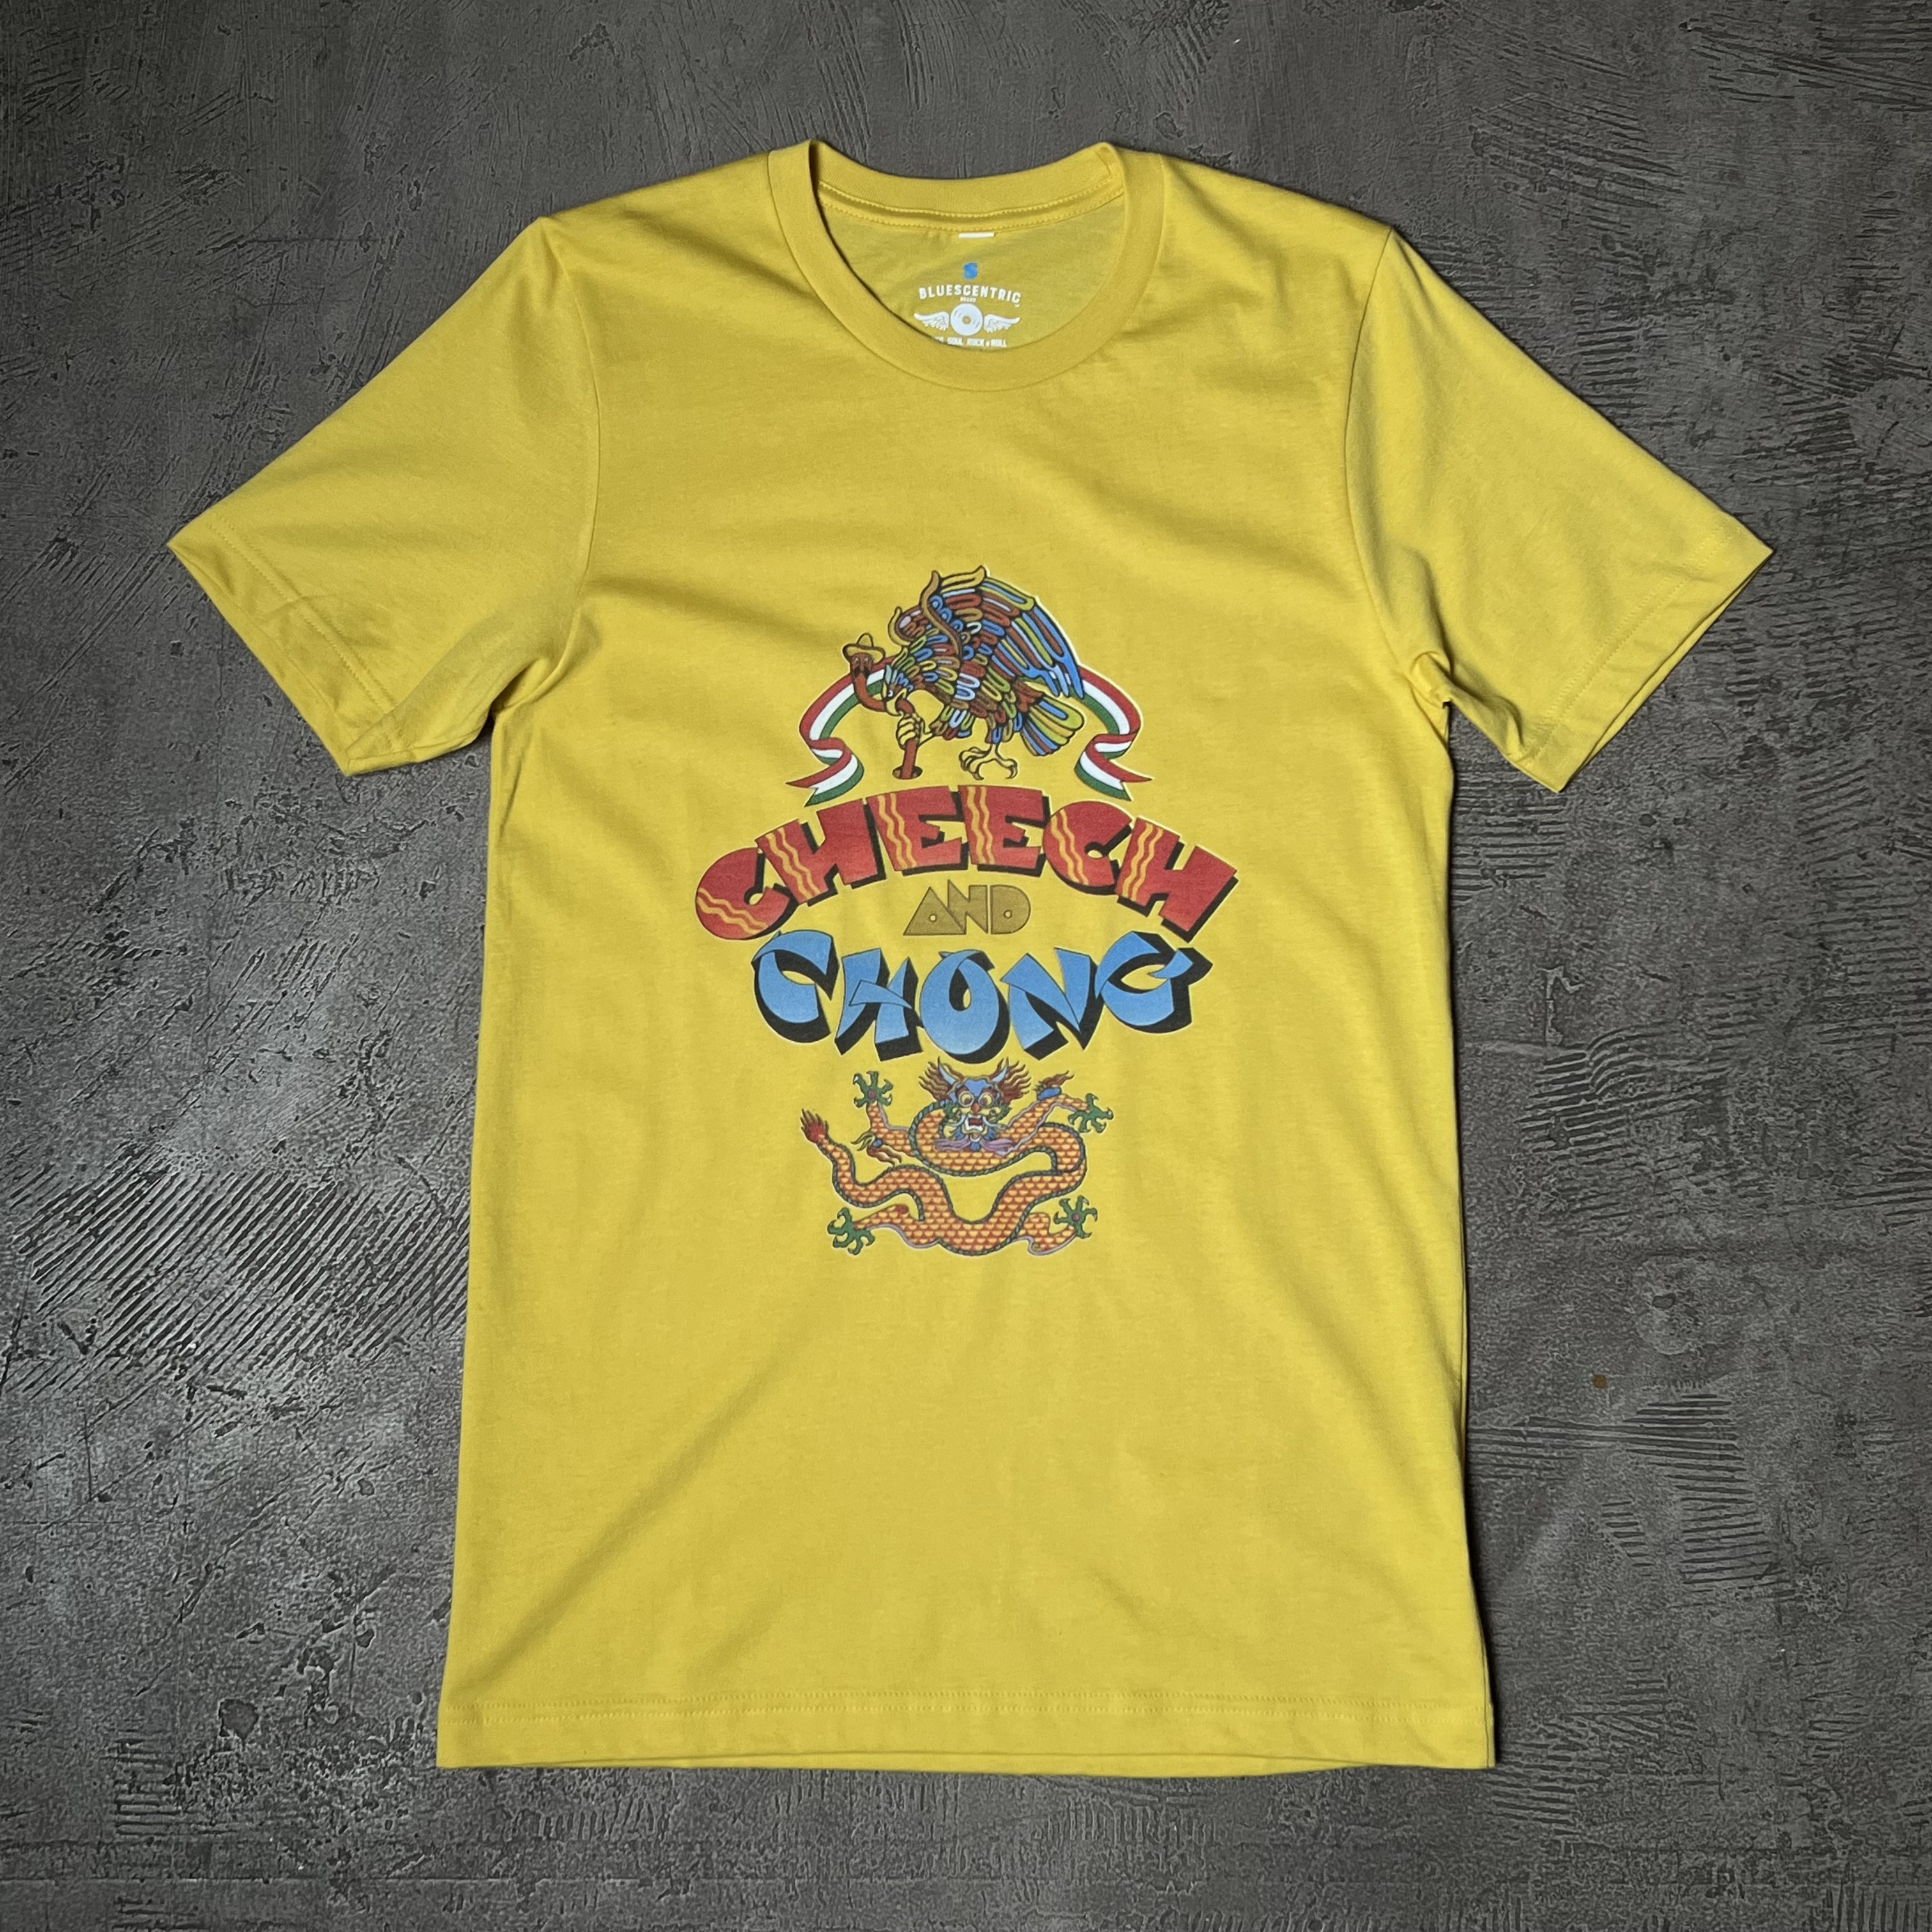 Cheech & Chong Album T-shirts